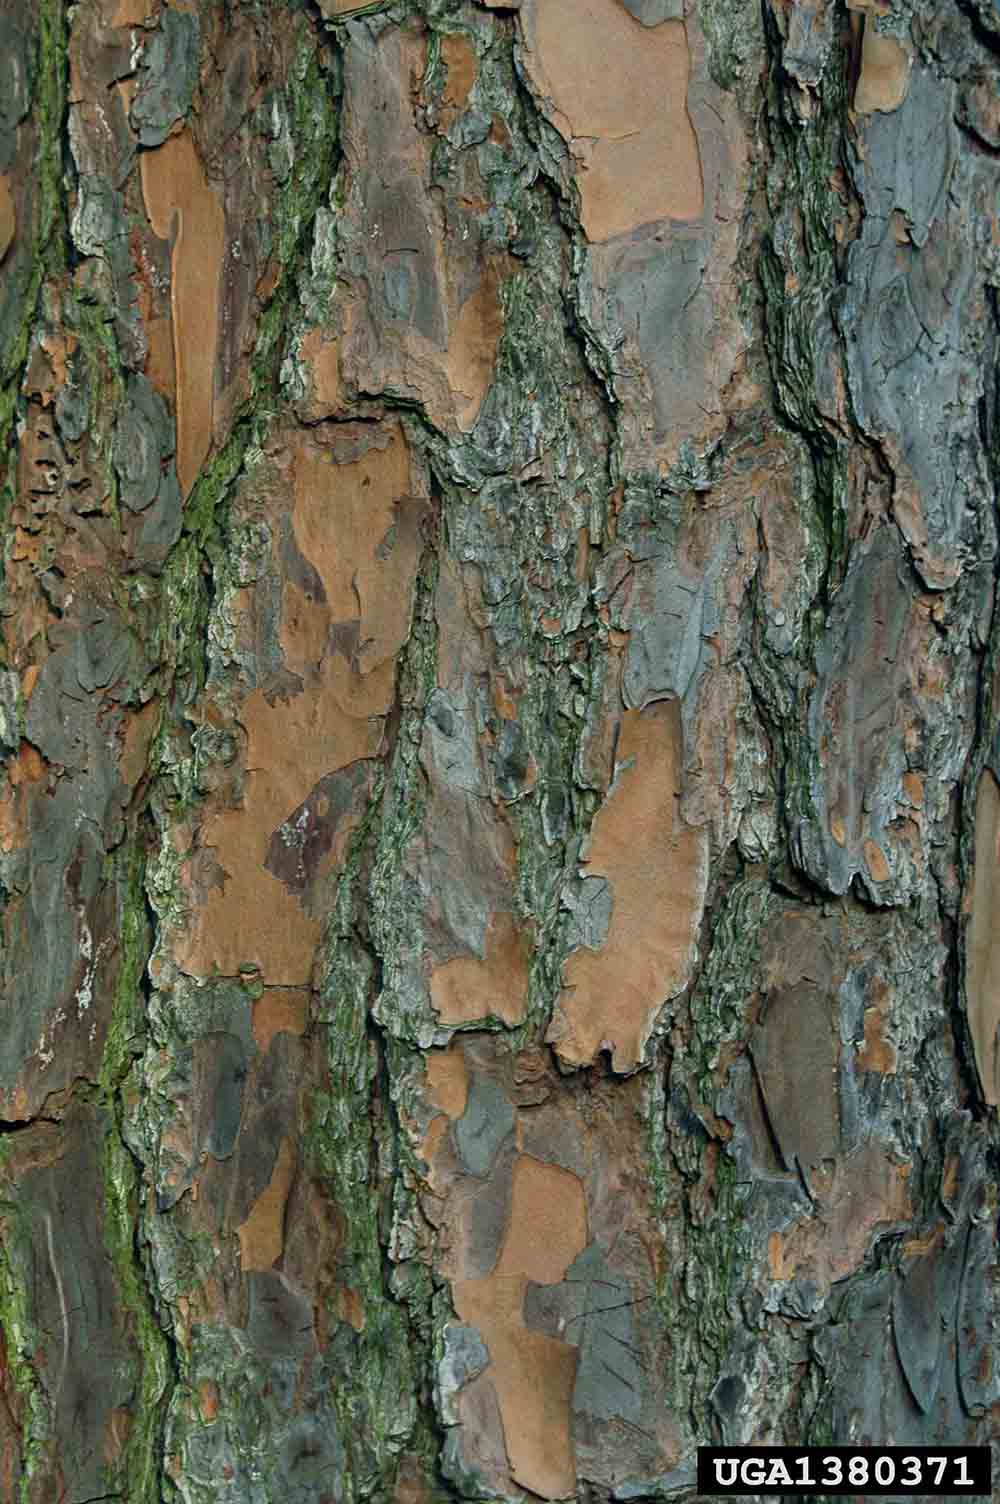 Slash pine bark on trunk